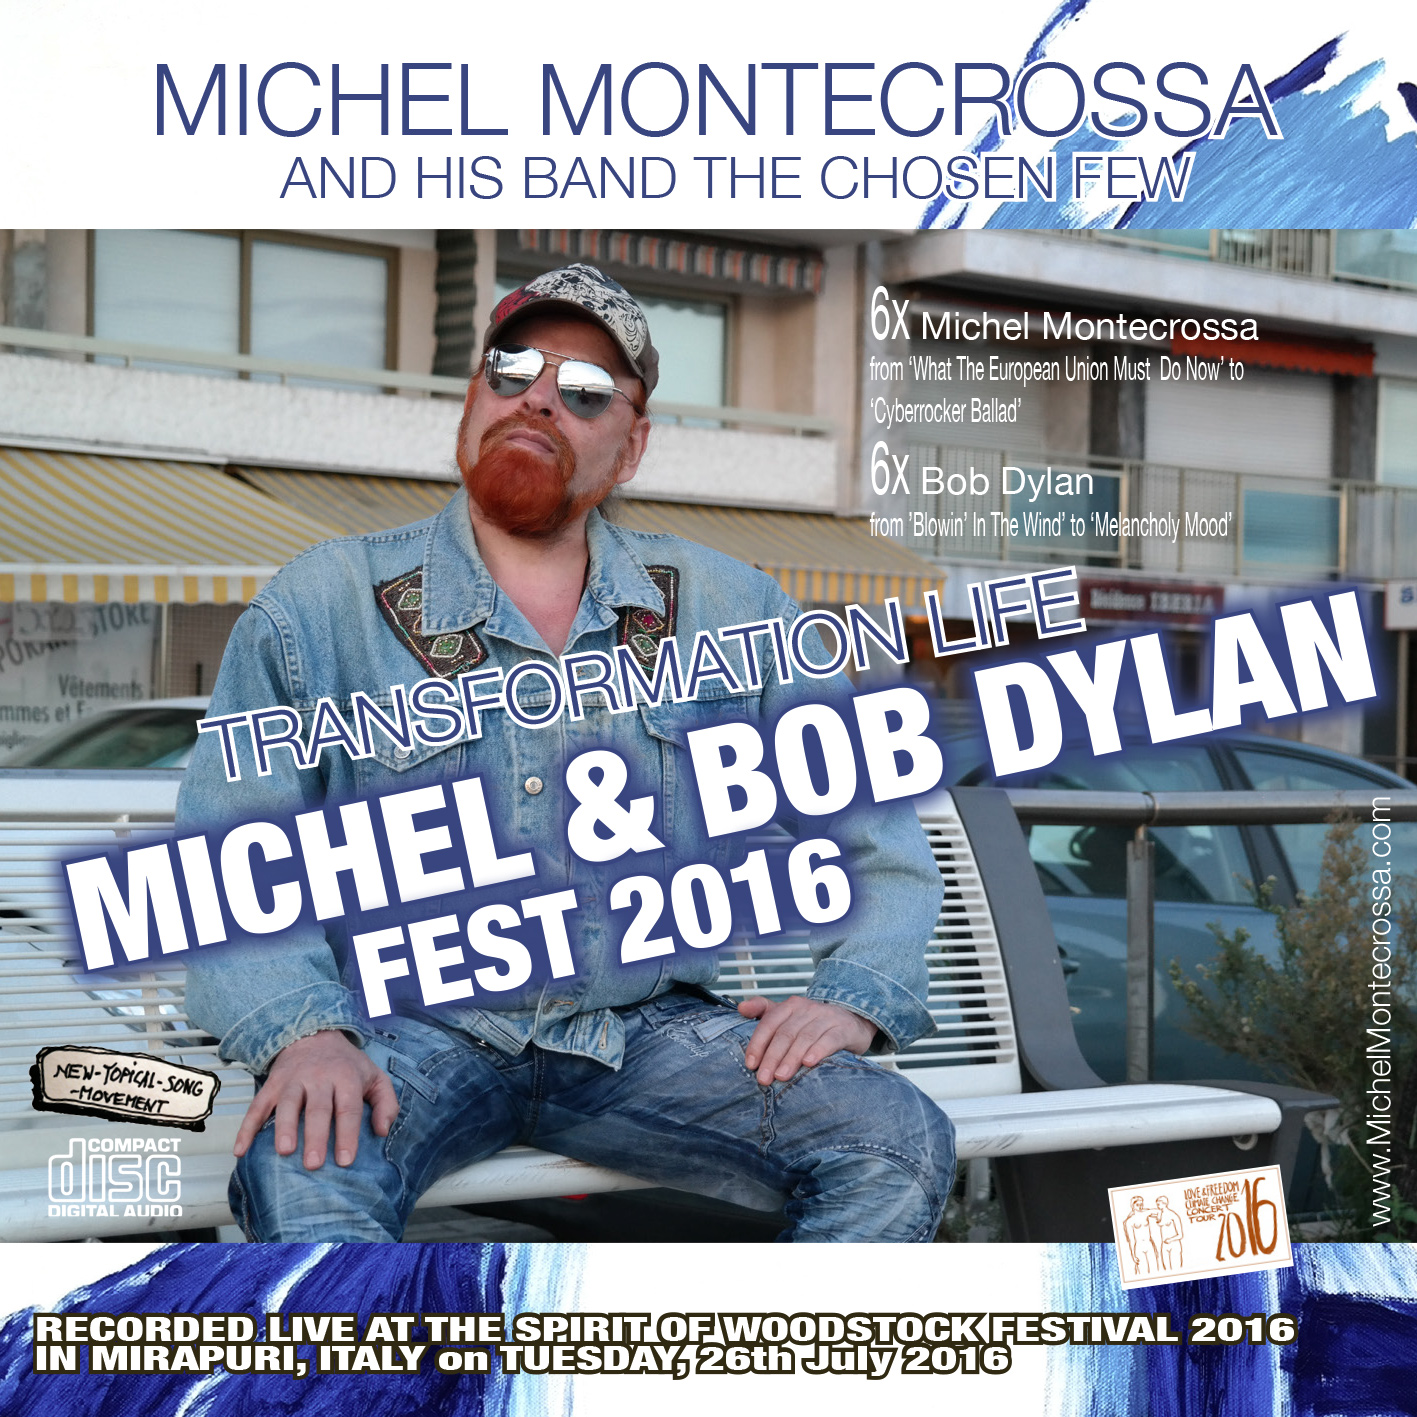 Transformation Life - Michel Montecrossa's Michel & Bob Dylan Fest 2016